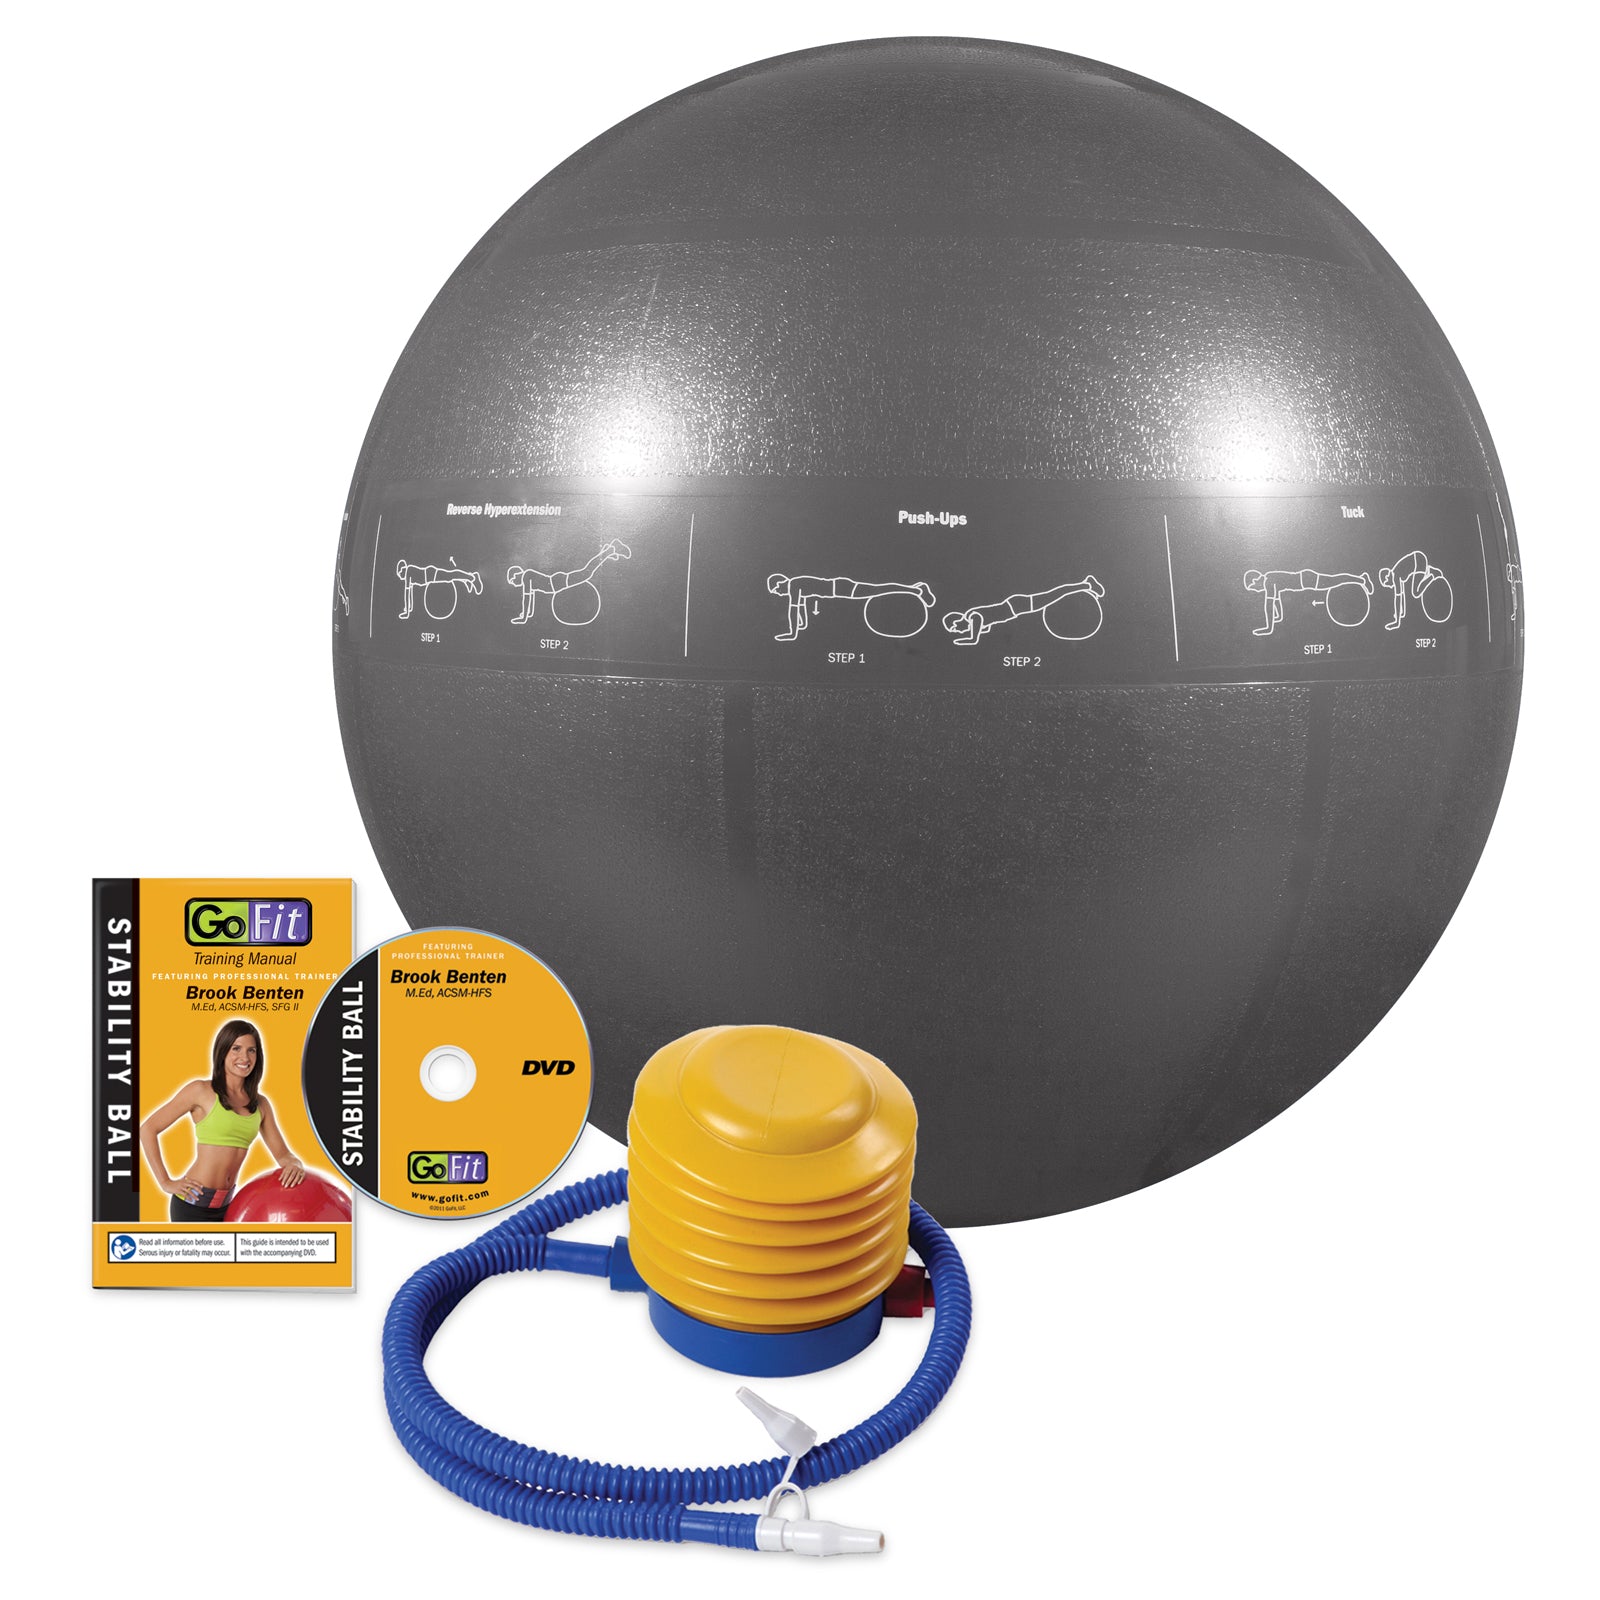 Buy Durable Yoga Ball Online, Exercise Balls